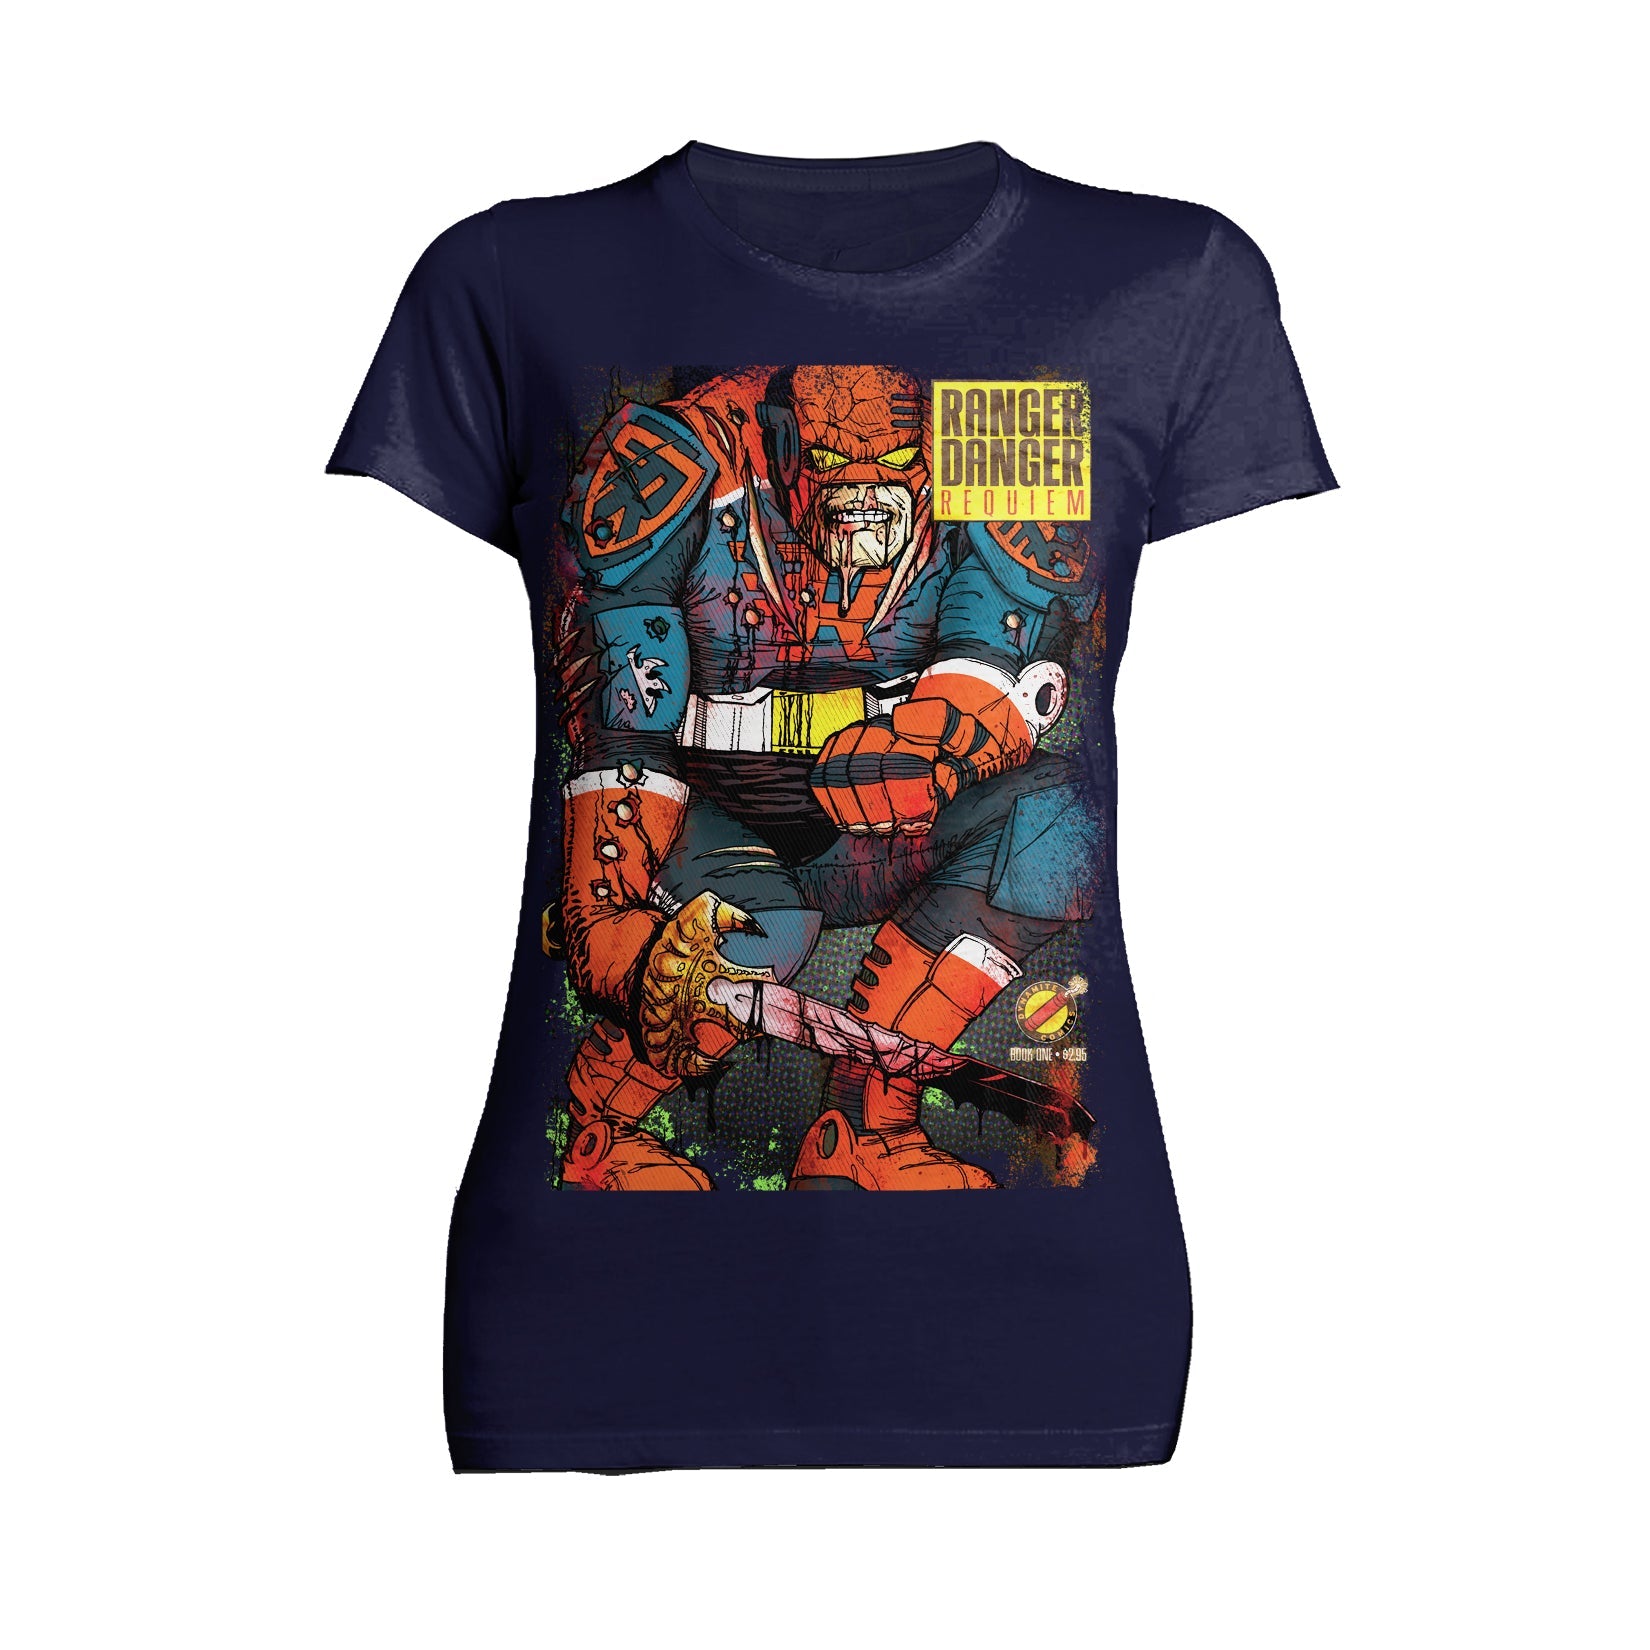 Kevin Smith Jay & Silent Bob Reboot Ranger Danger Requiem Comic LDN Variant Official Women's T-Shirt